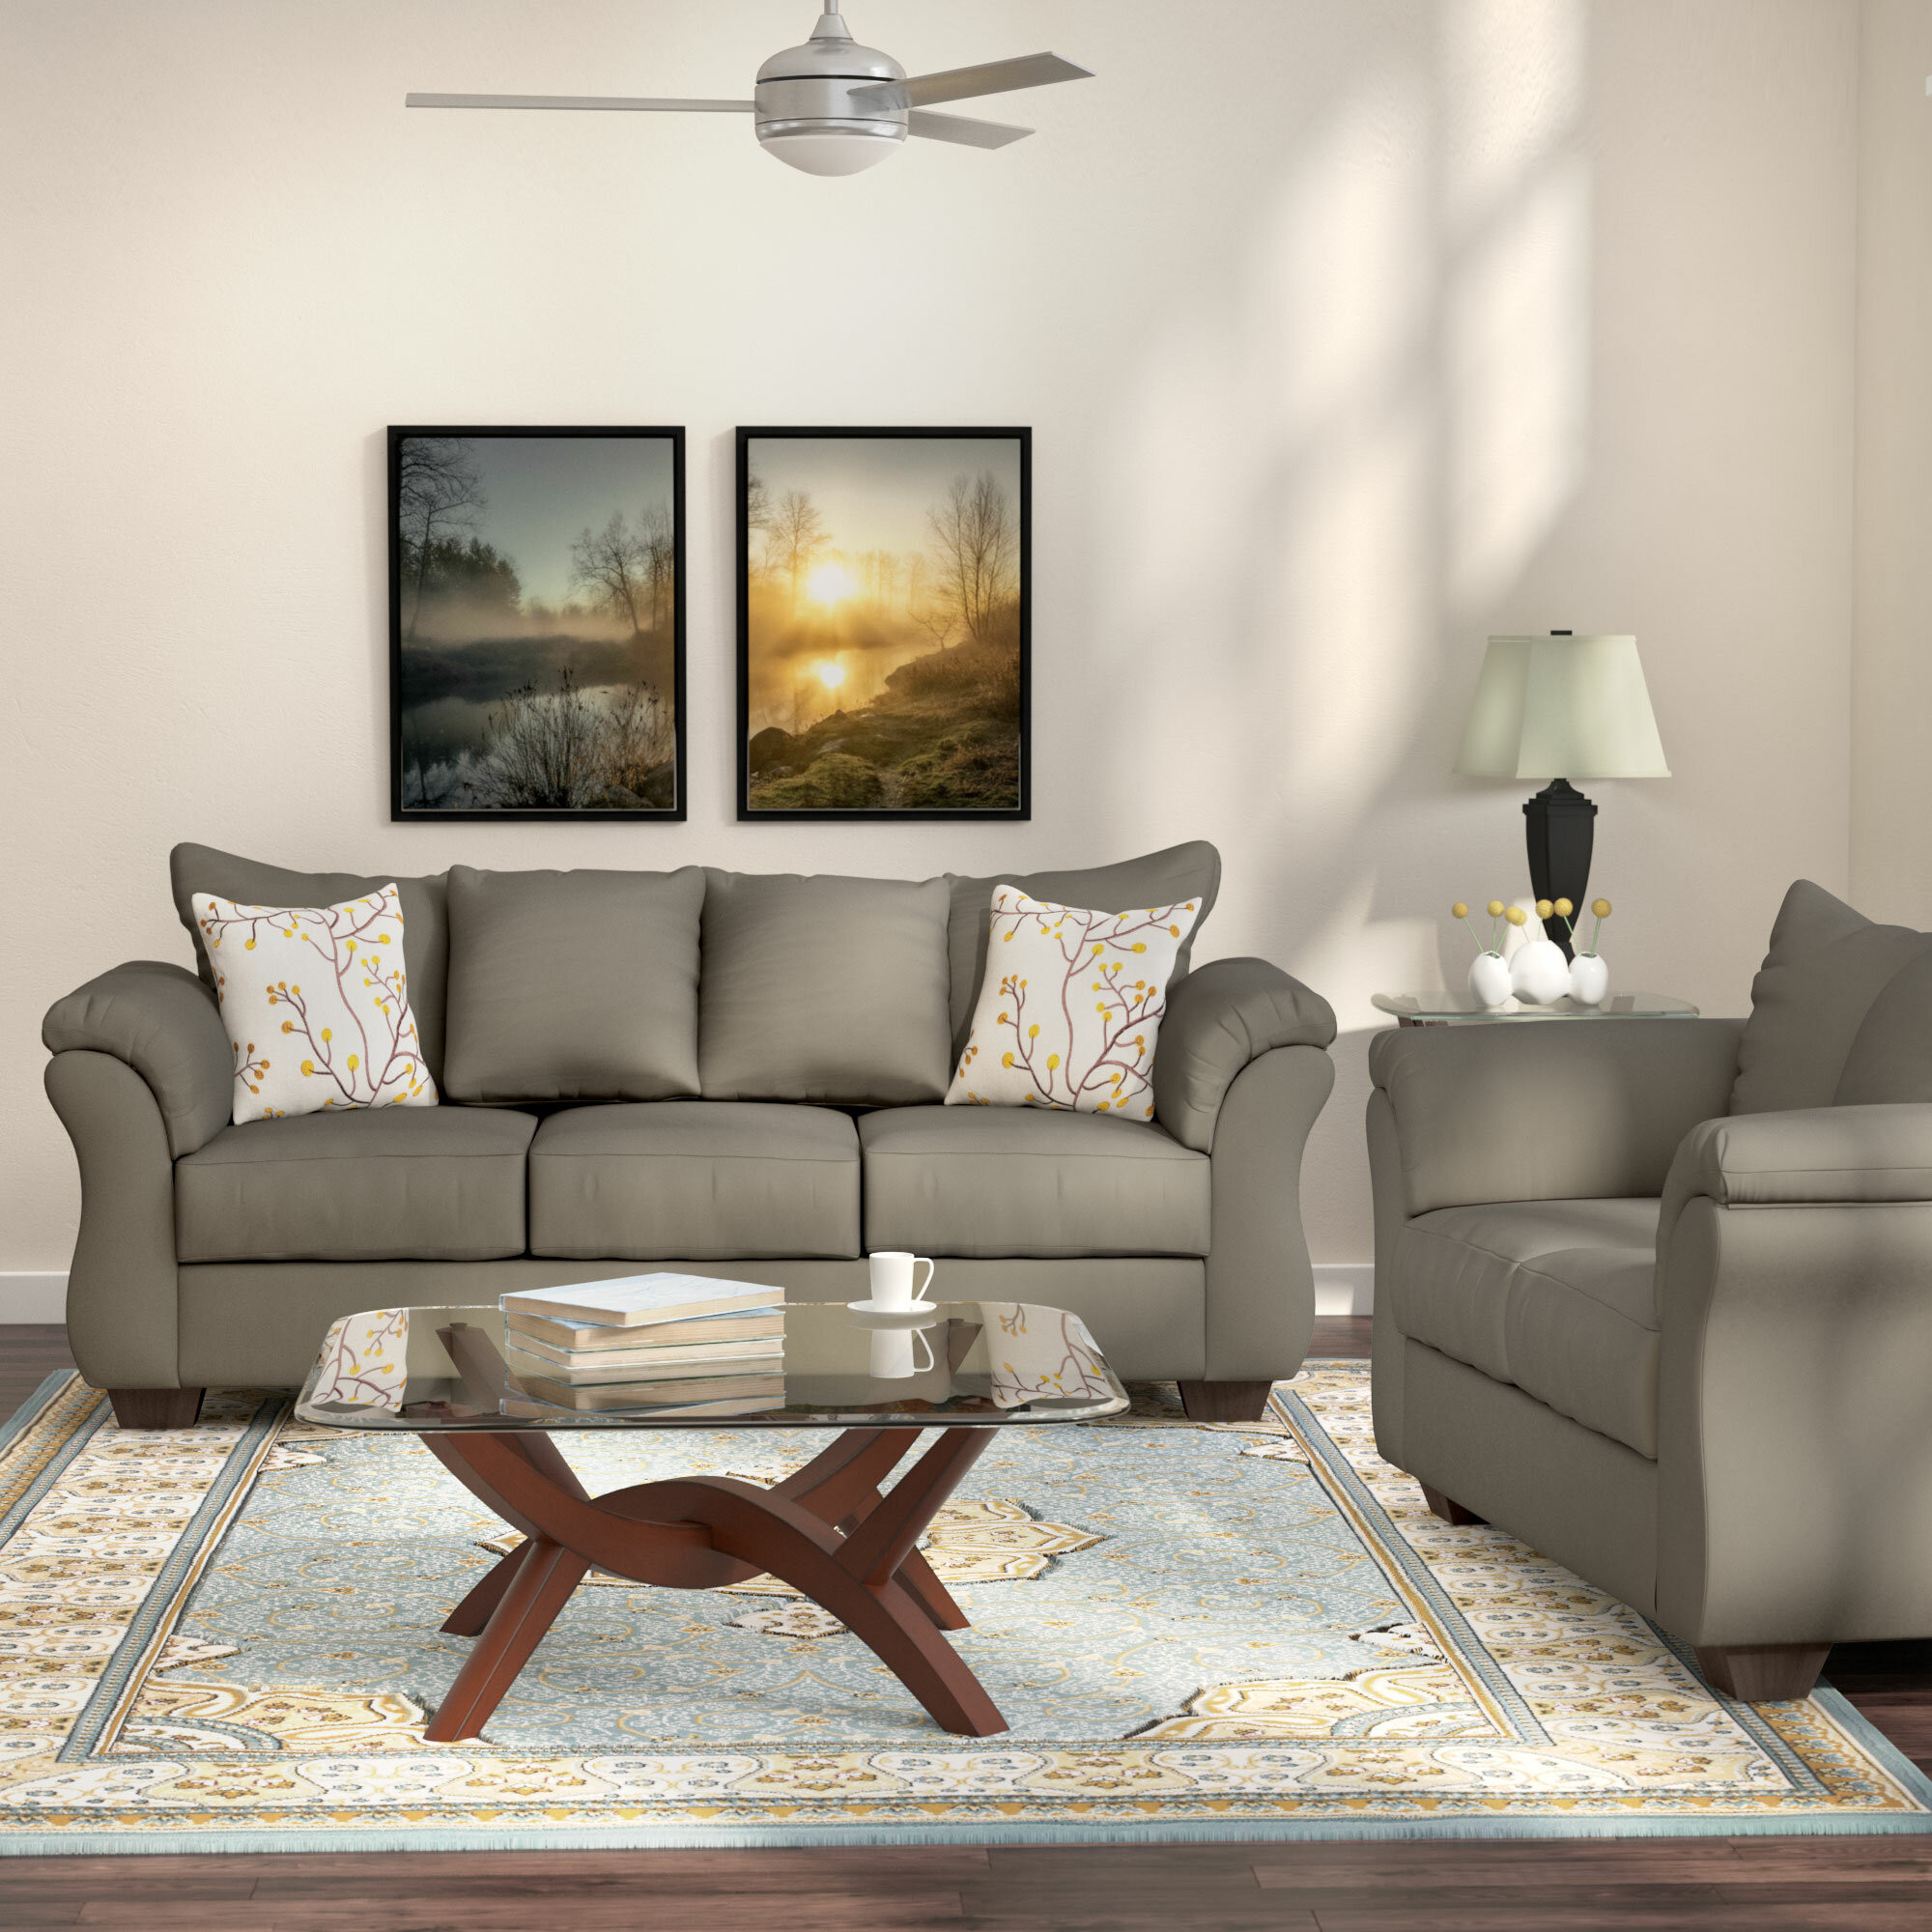 Wayfair Living Room Ideas
 Andover Mills Chisolm 2 Piece Living Room Set & Reviews